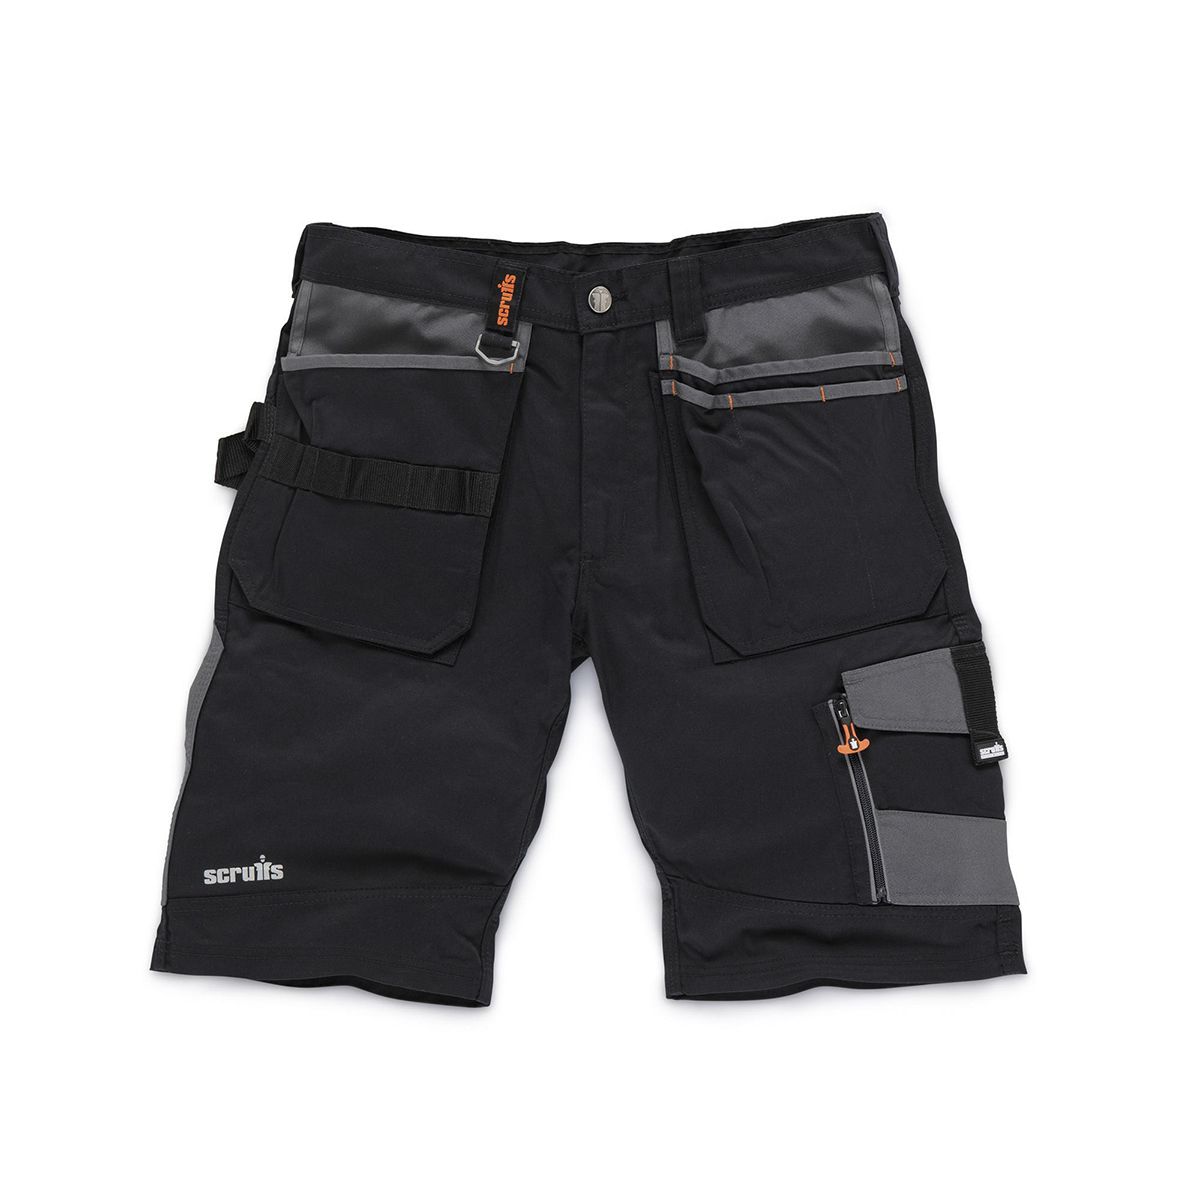 Pantalones cortos de trabajo  para hombre Scruffs de Tela de color Negro, talla 34plg